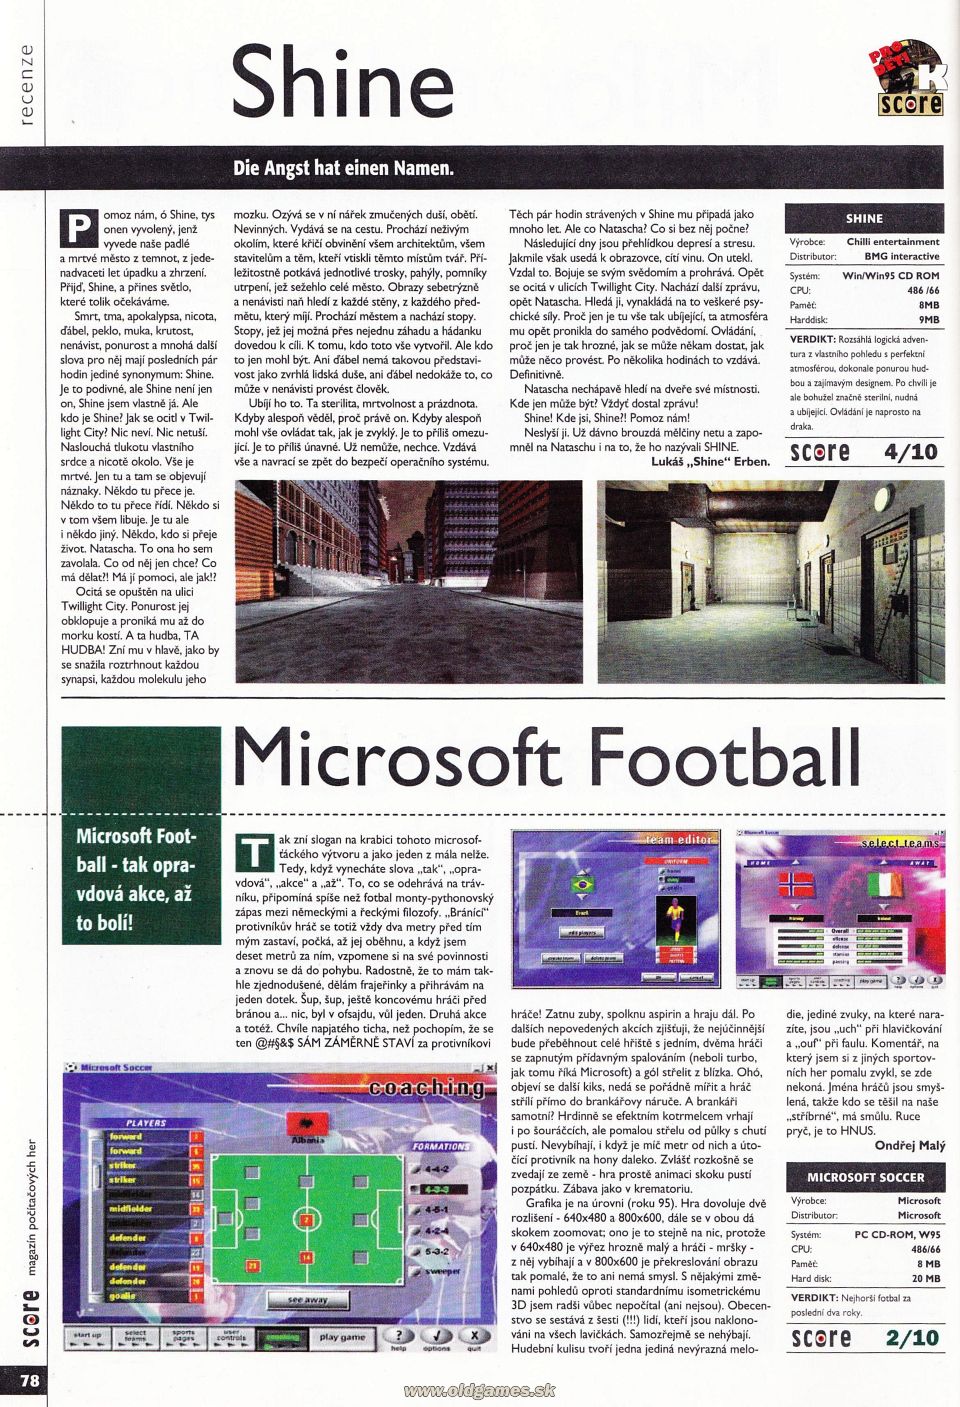 Shine, Microsoft Football